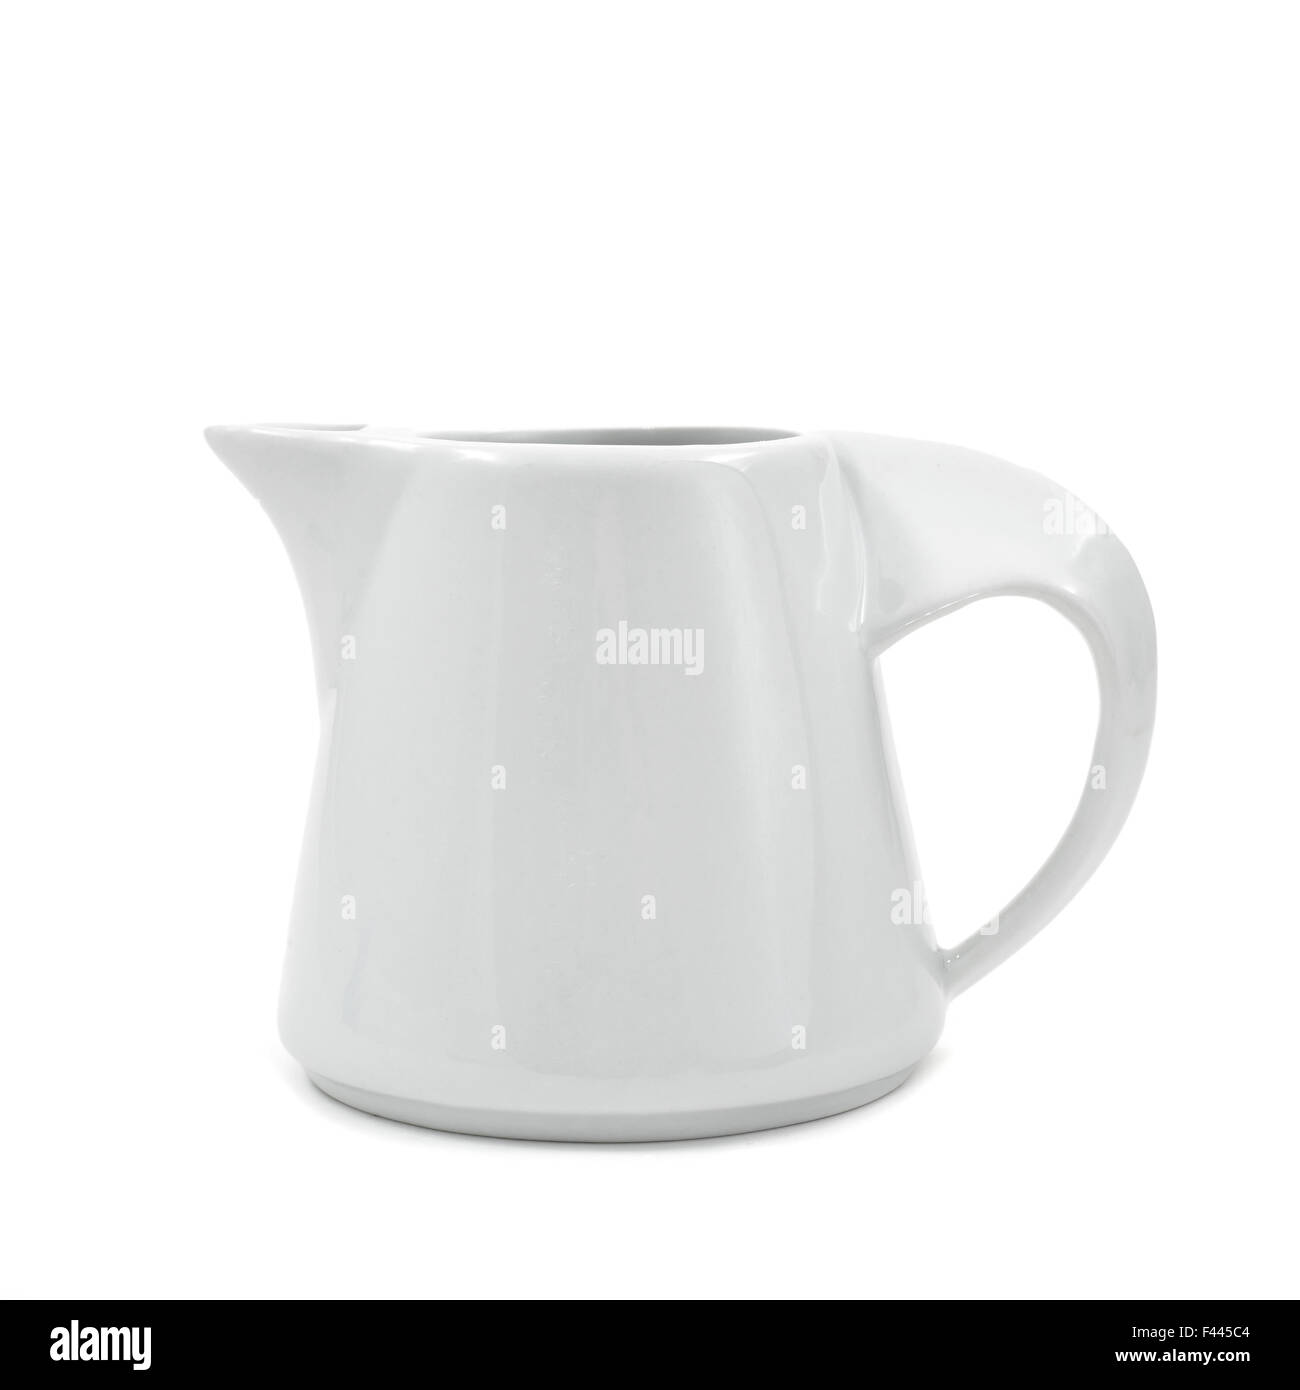 https://c8.alamy.com/comp/F445C4/a-white-ceramic-milk-pot-on-a-white-background-F445C4.jpg